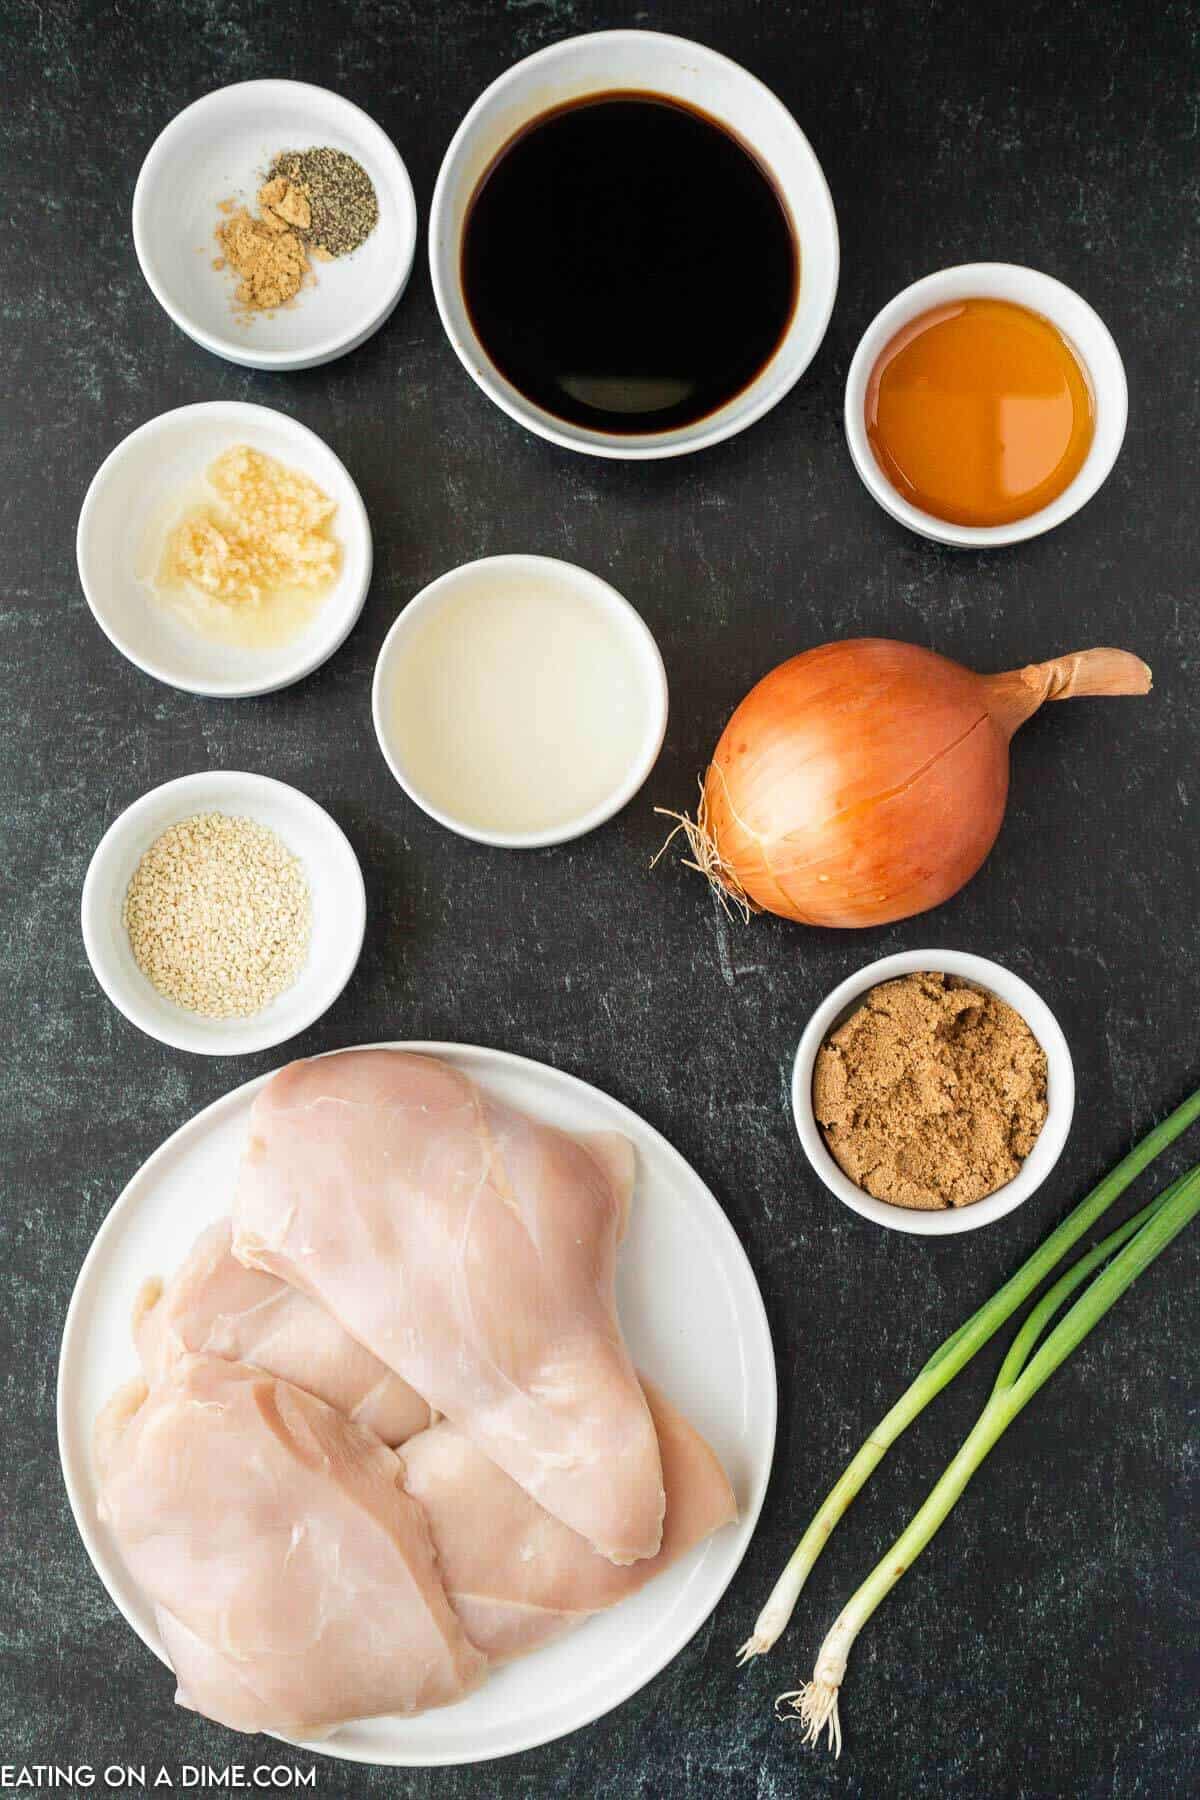 Chicken Teriyaki Ingredients - chicken, onion, brown sugar, soy sauce, rice wine vinegar, honey, garlic, ginger, pepper, sesame seeds, green onion